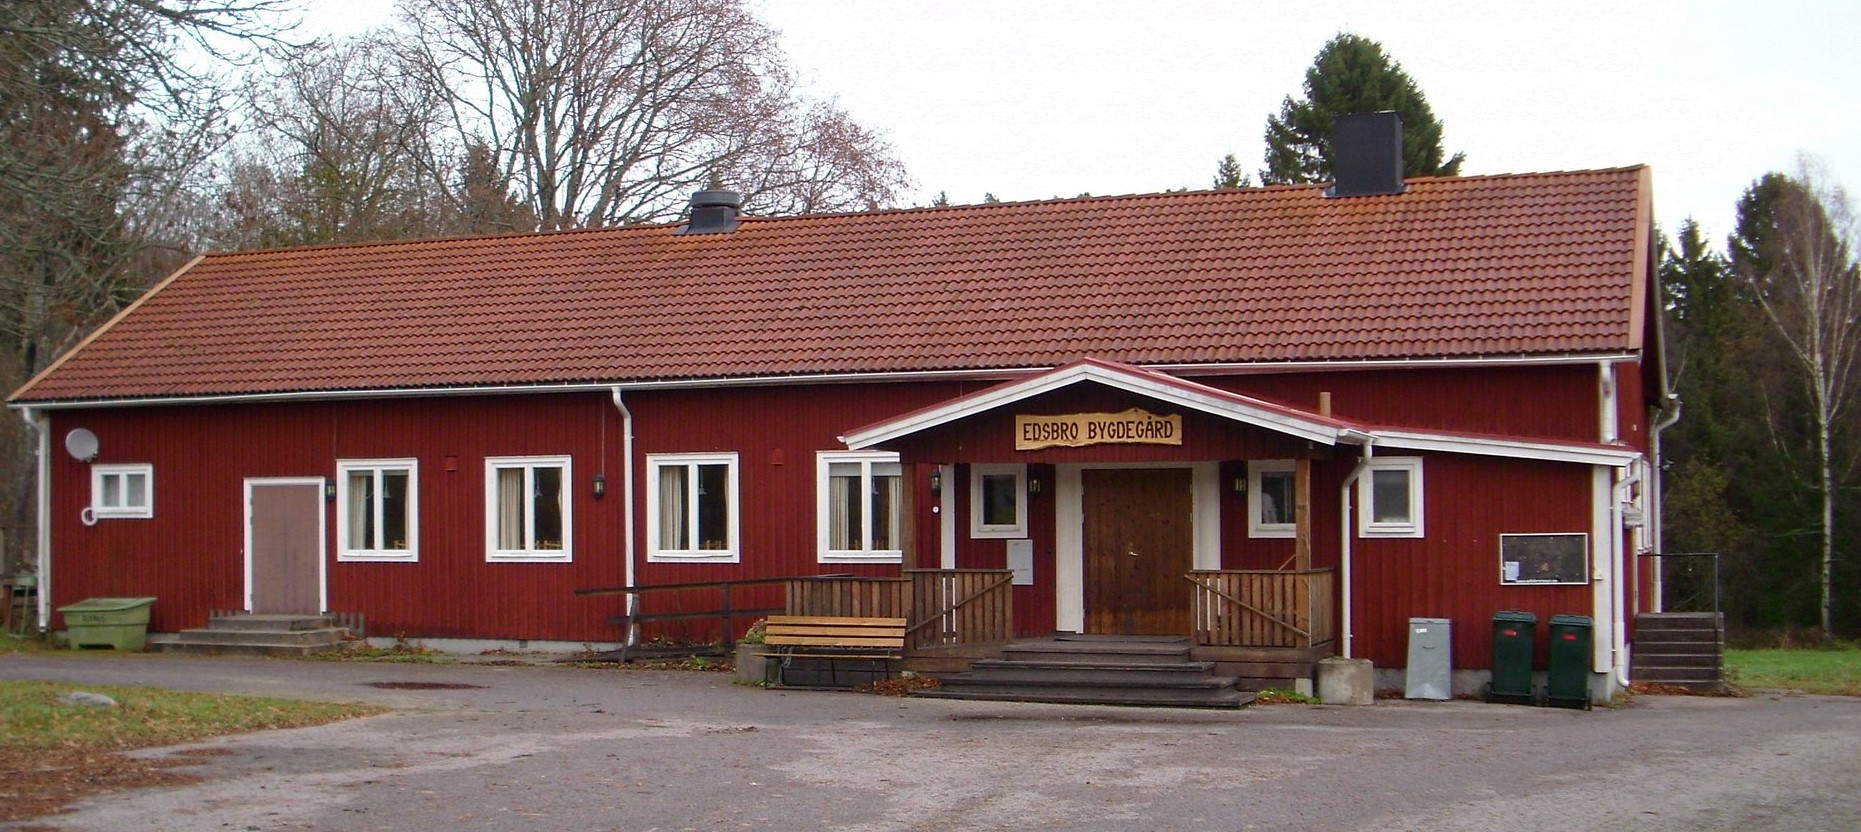 Edsbro bygdegård